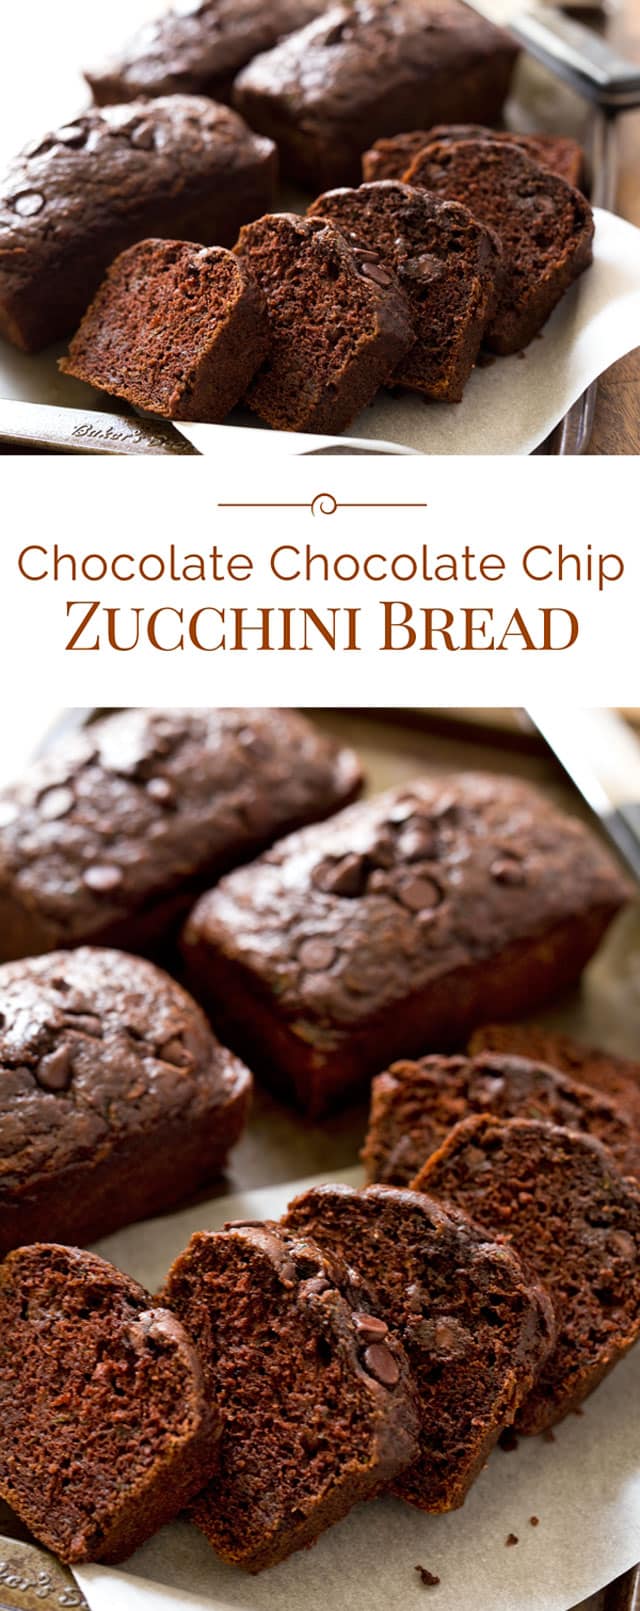 Chocolate Chocolate Chip Zucchini Bread - Barbara Bakes